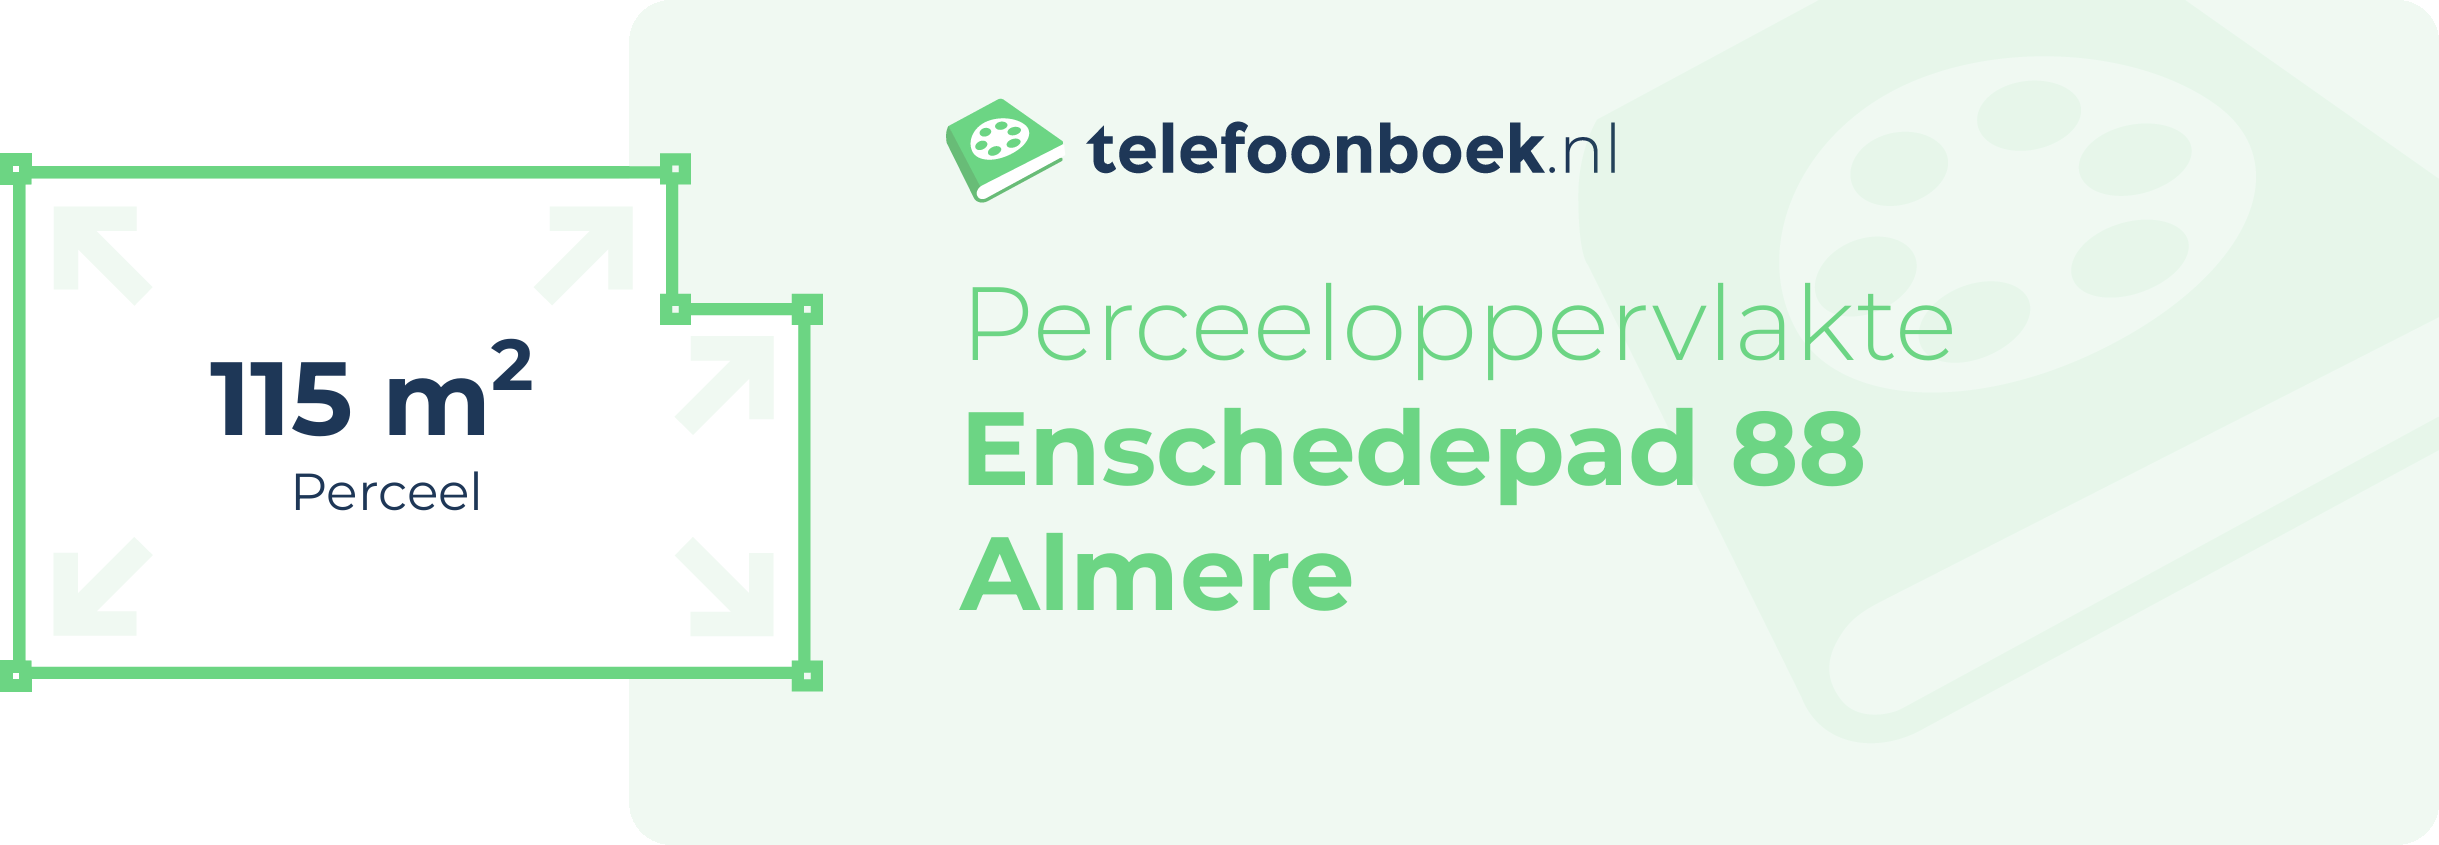 Perceeloppervlakte Enschedepad 88 Almere